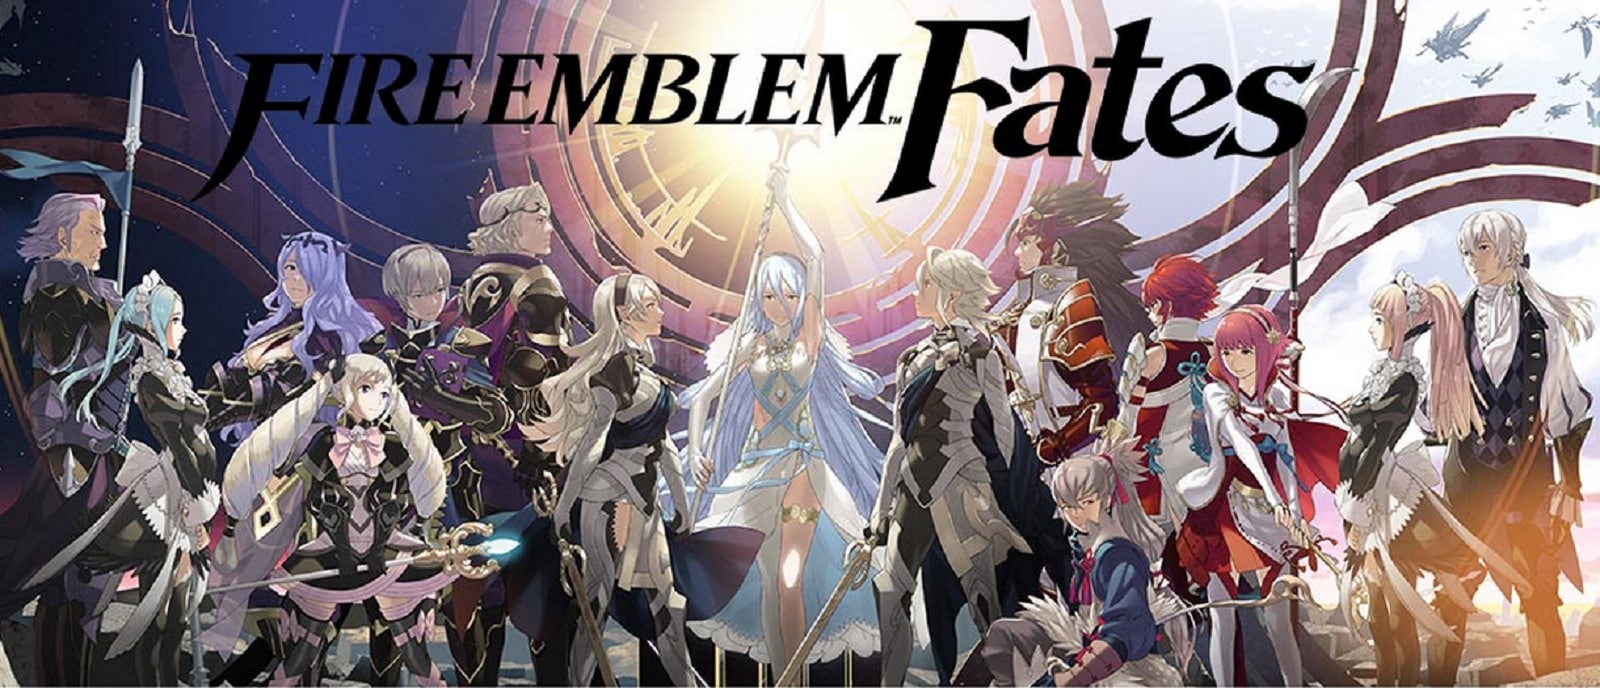 Fire Emblem Fates Cast Banner Artwork 3DS Official Nintendo